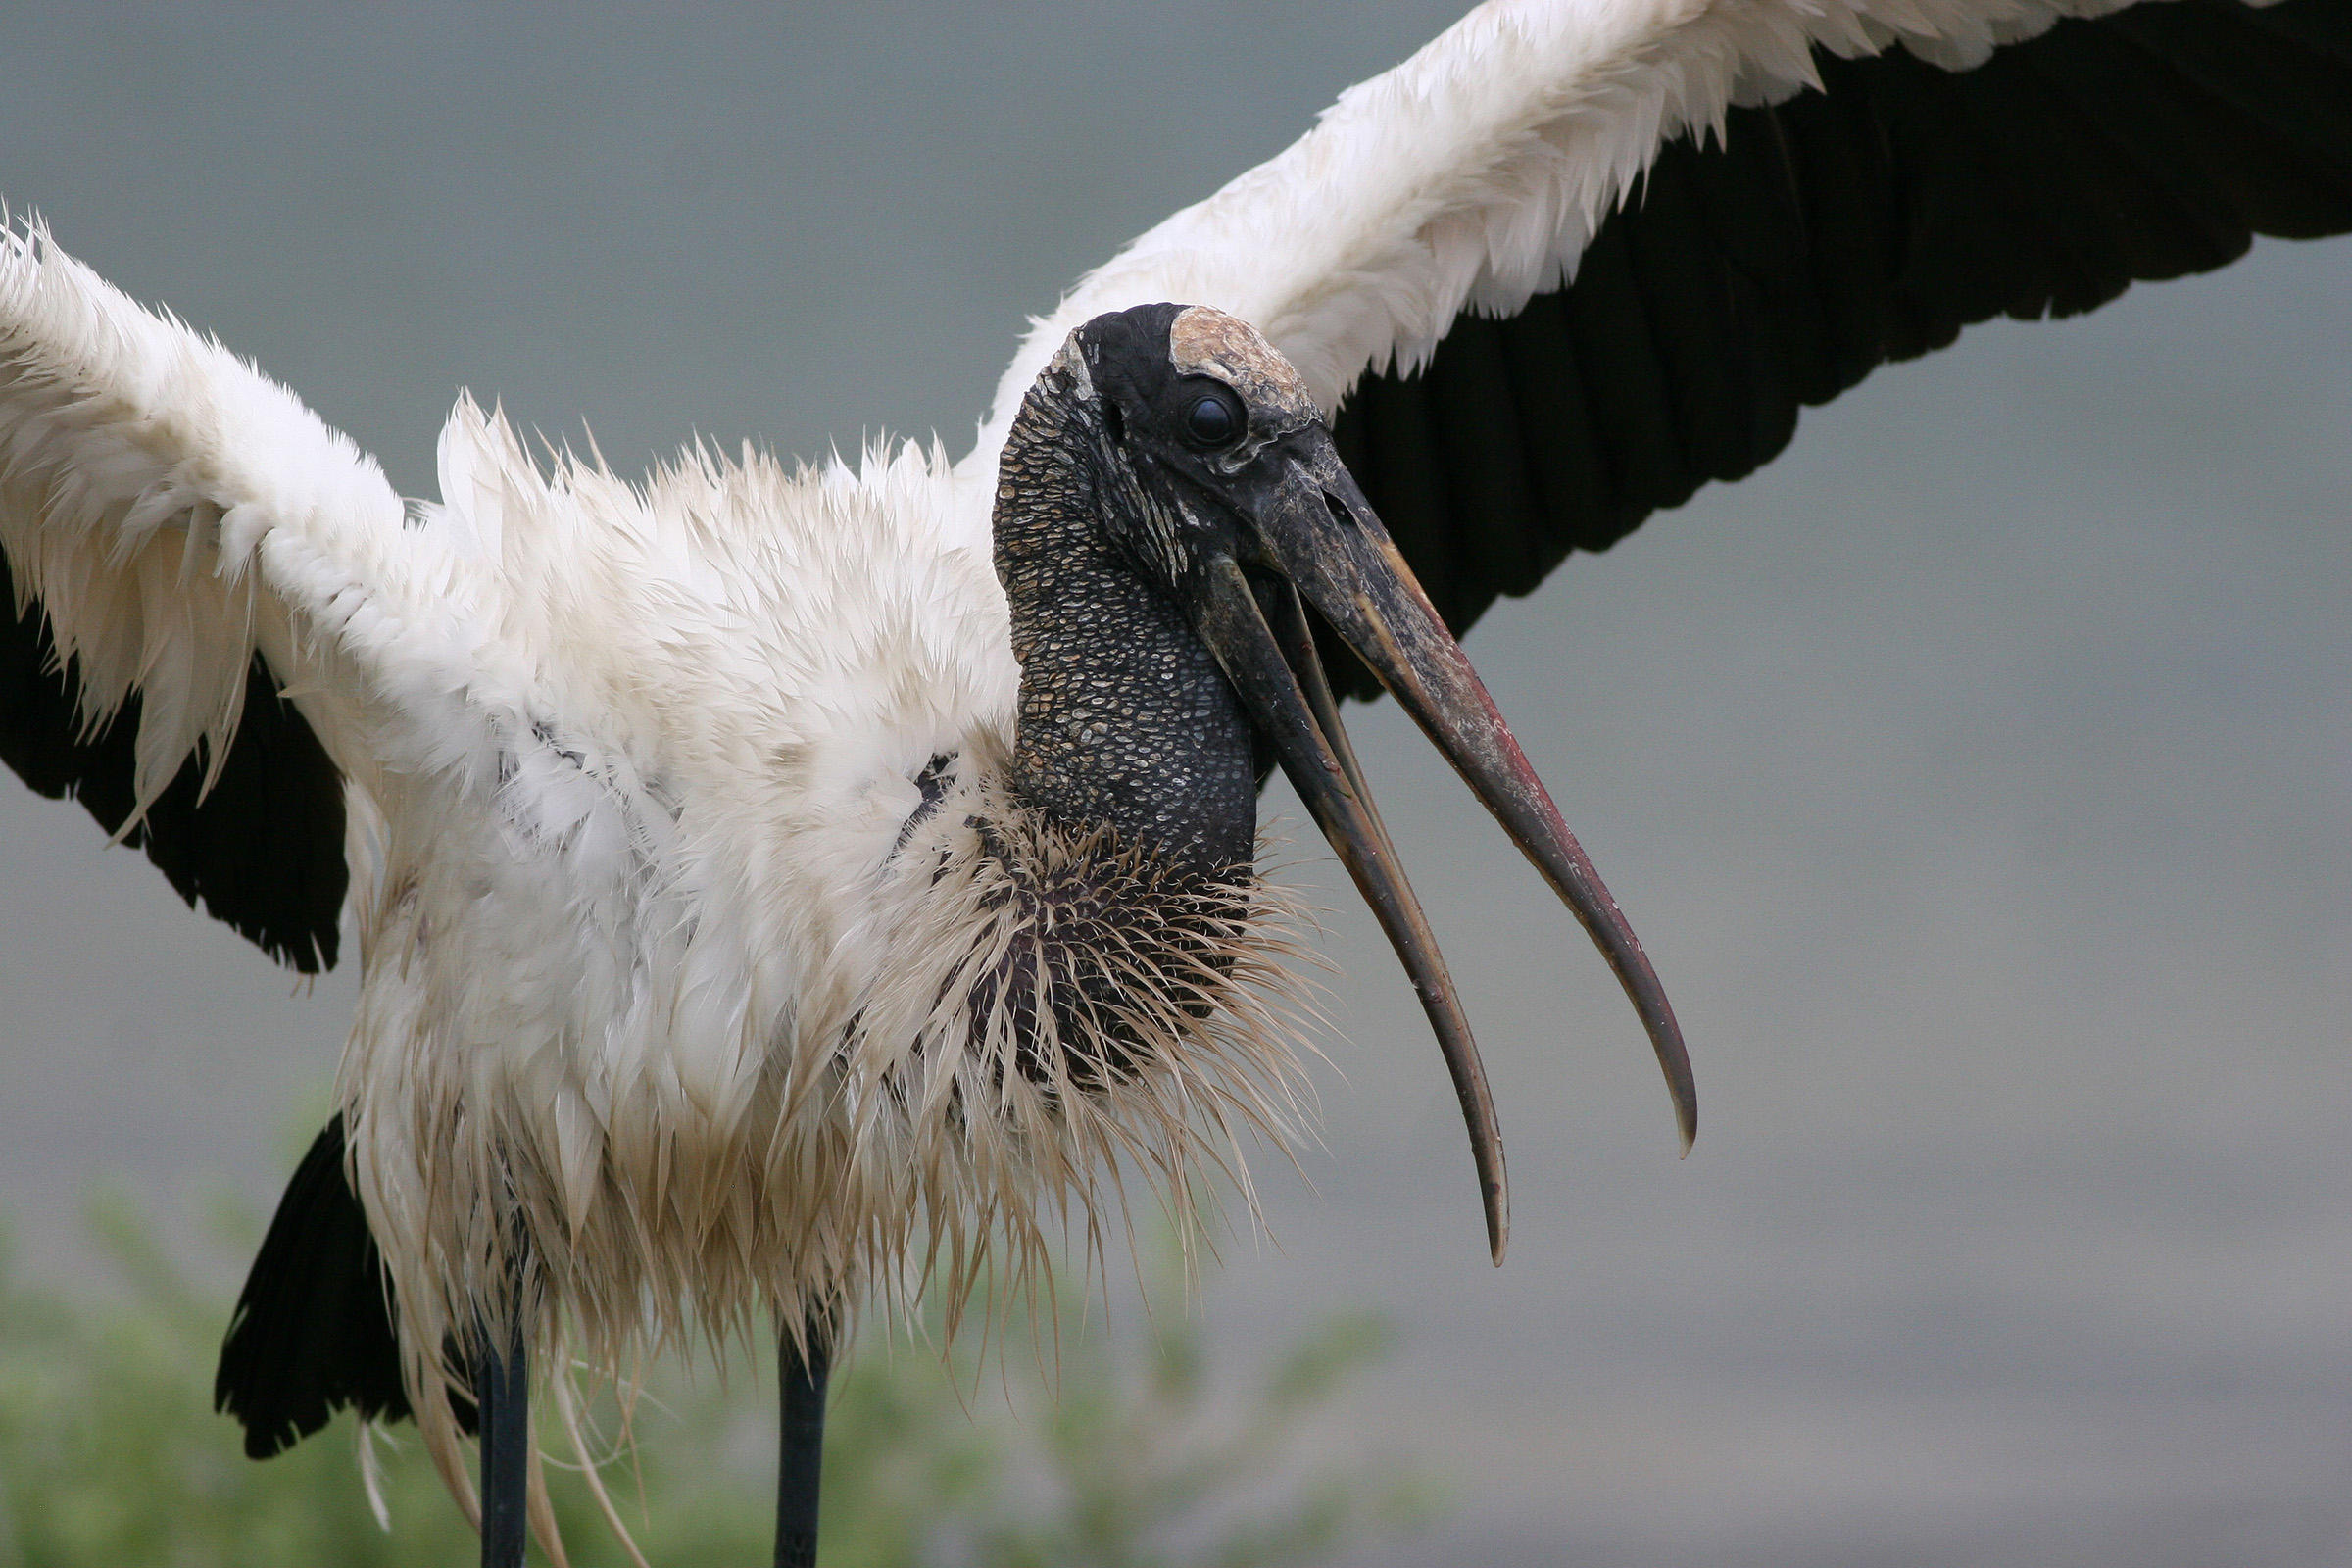 Wood stork photo